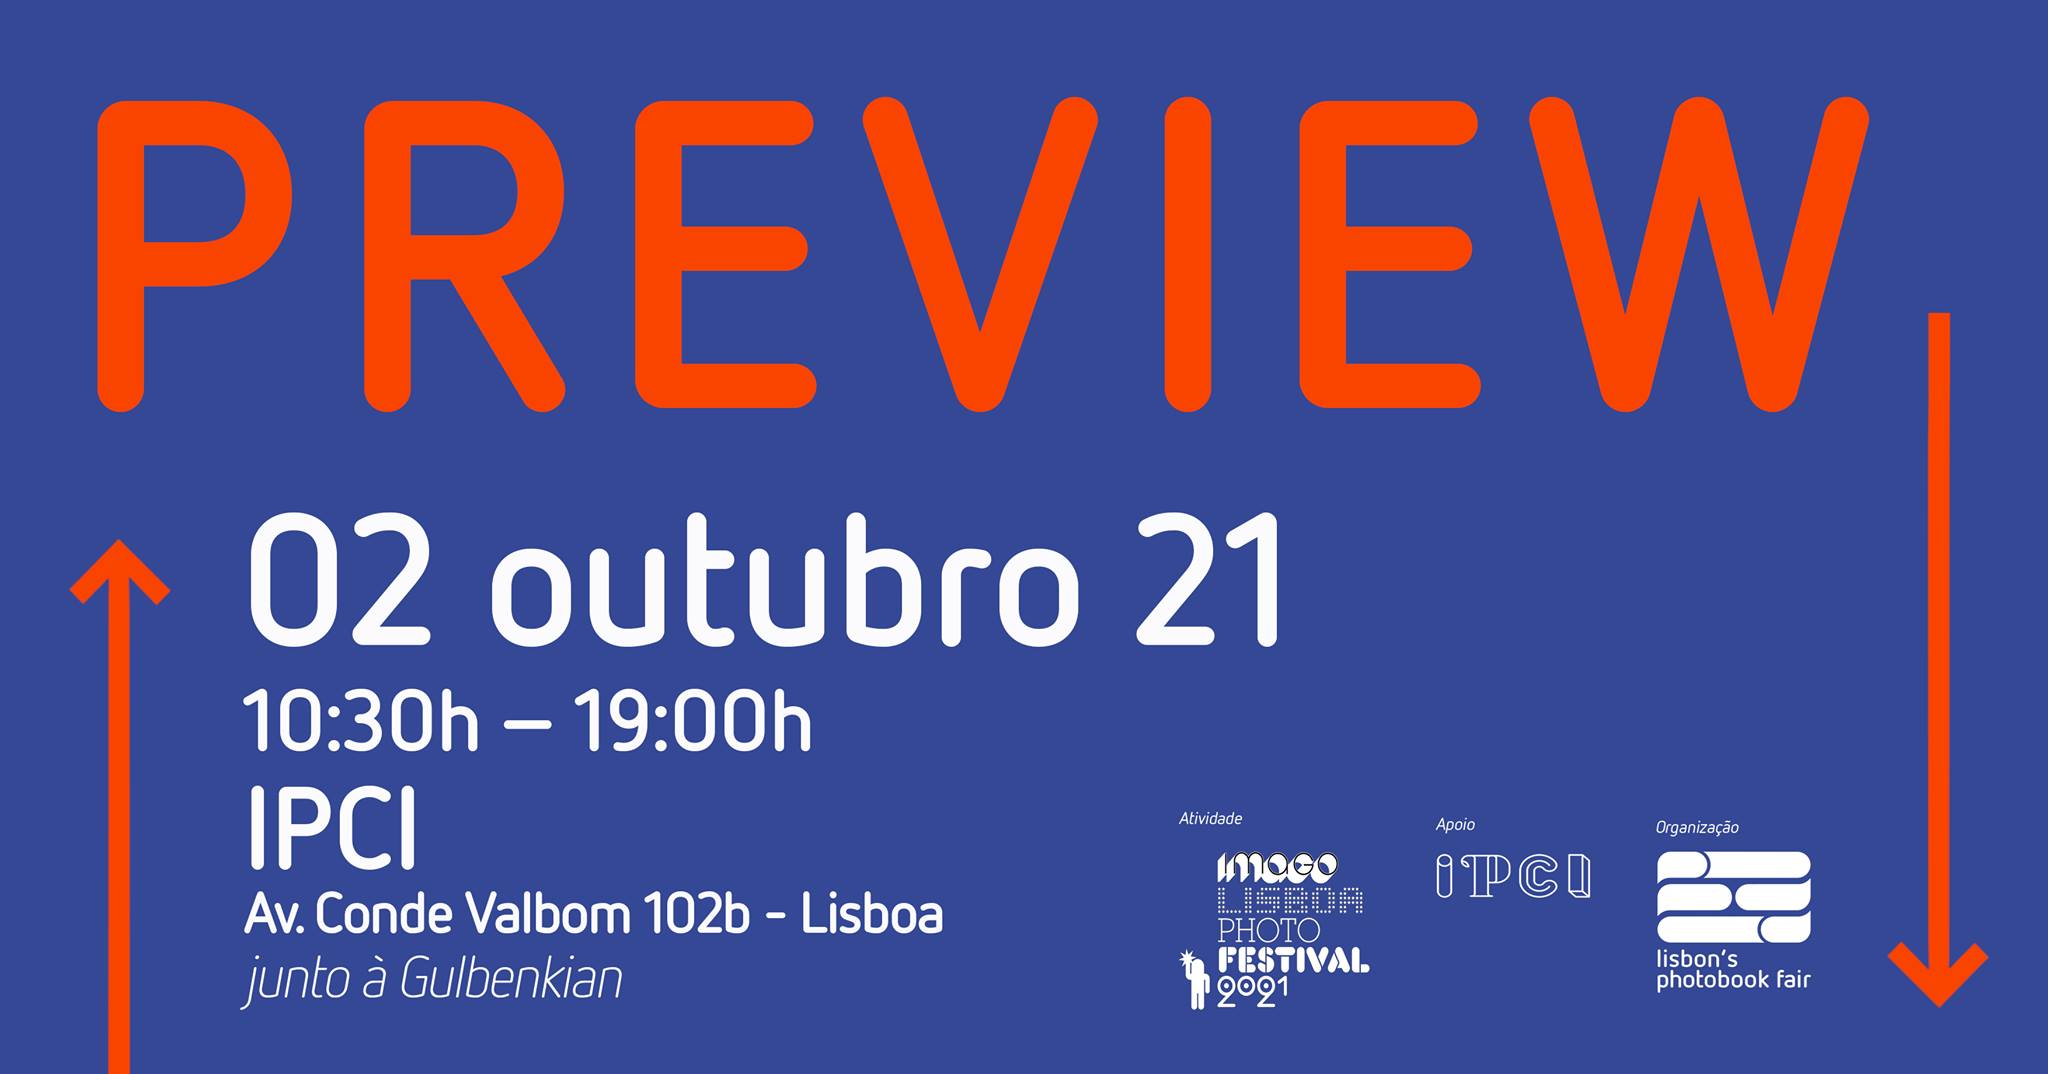 PREVIEW - Lisbon Photobook Fair